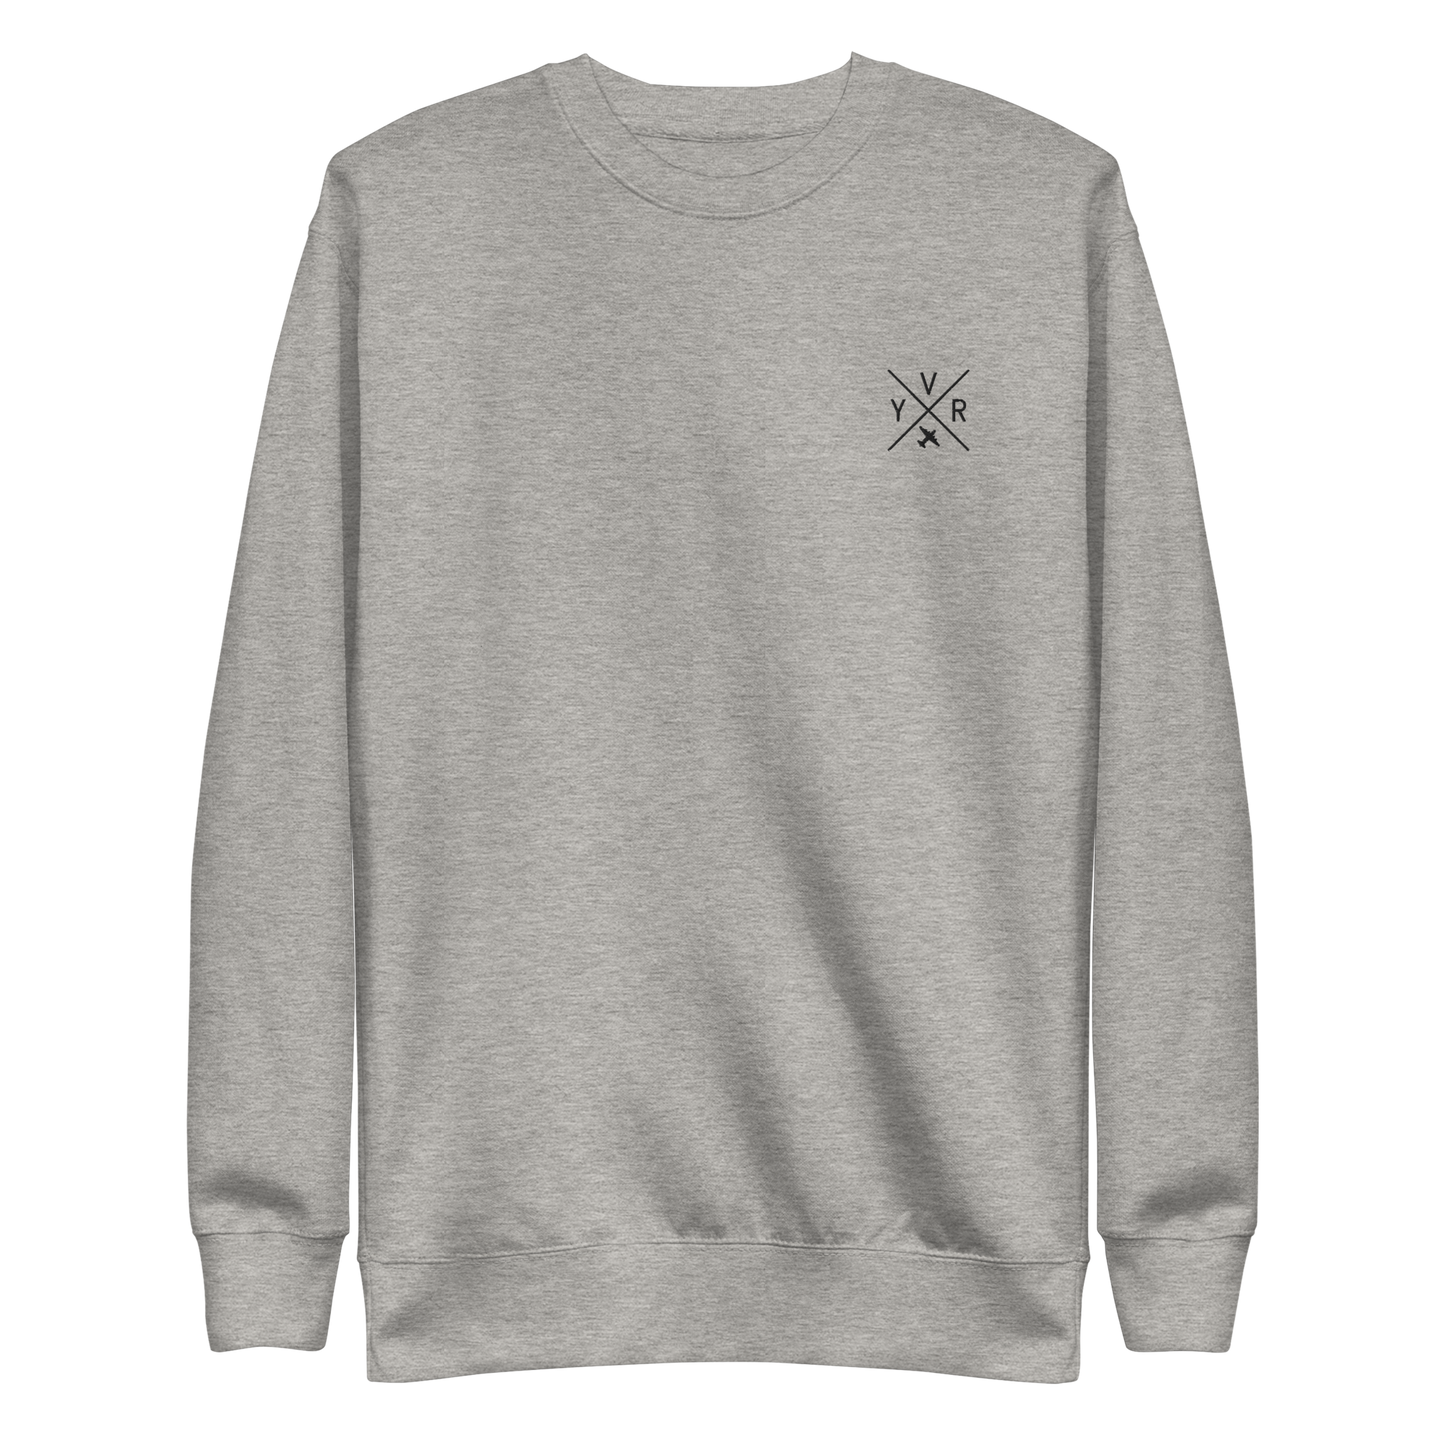 YHM Designs - YVR Vancouver Premium Sweatshirt - Crossed-X Design with Airport Code and Vintage Propliner - Black Embroidery - Image 02